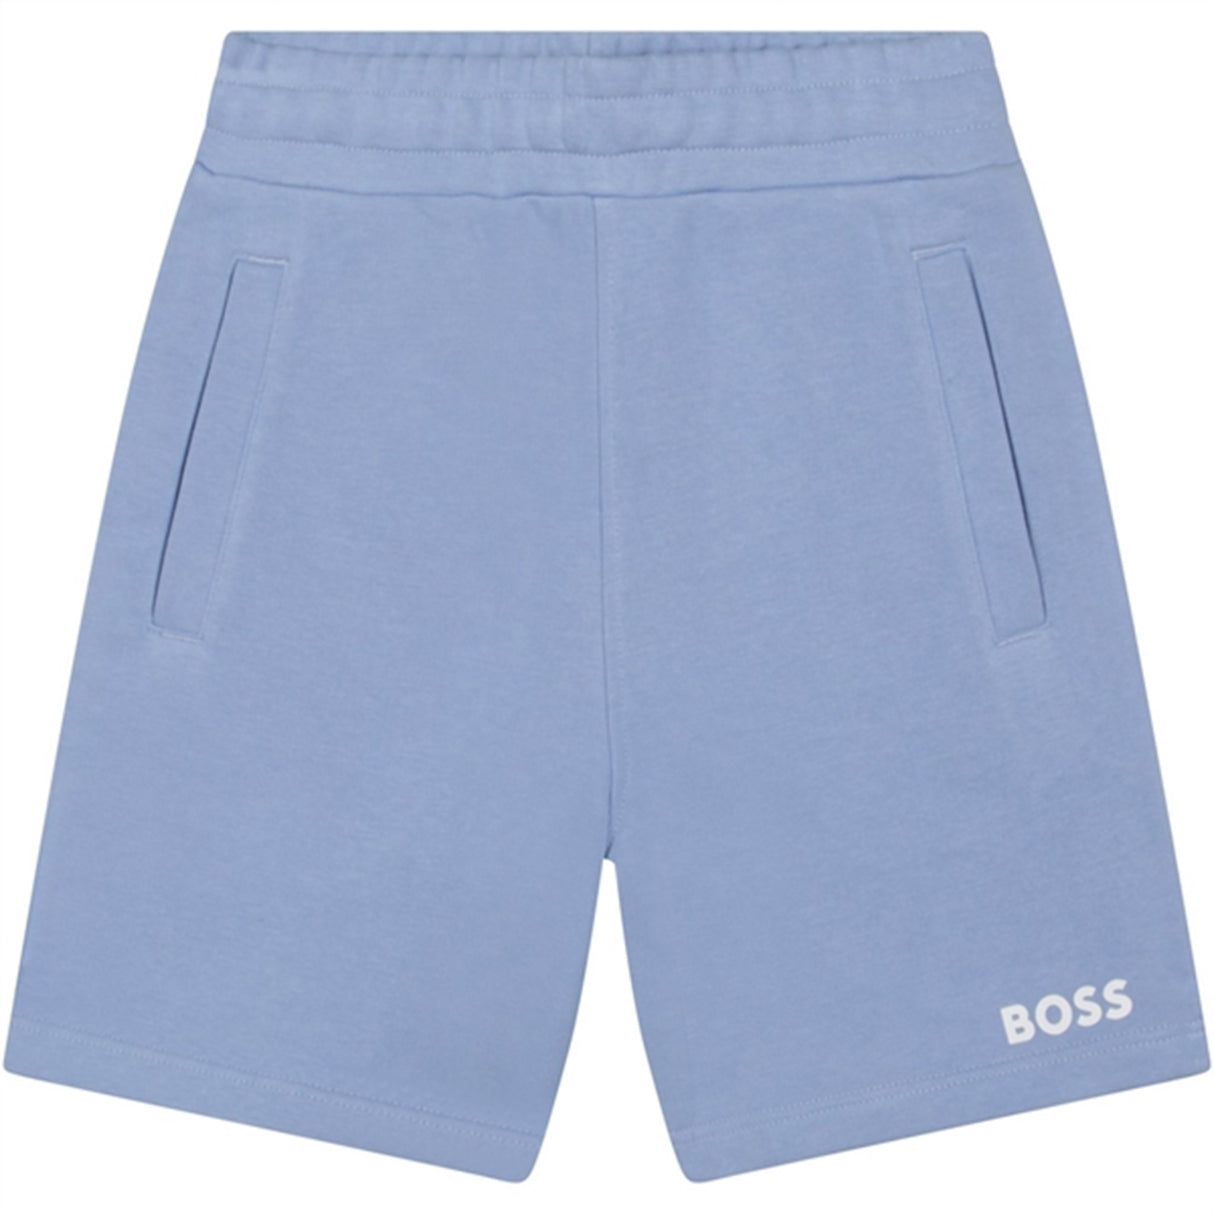 Hugo Boss Bermuda Shorts Pale Blue